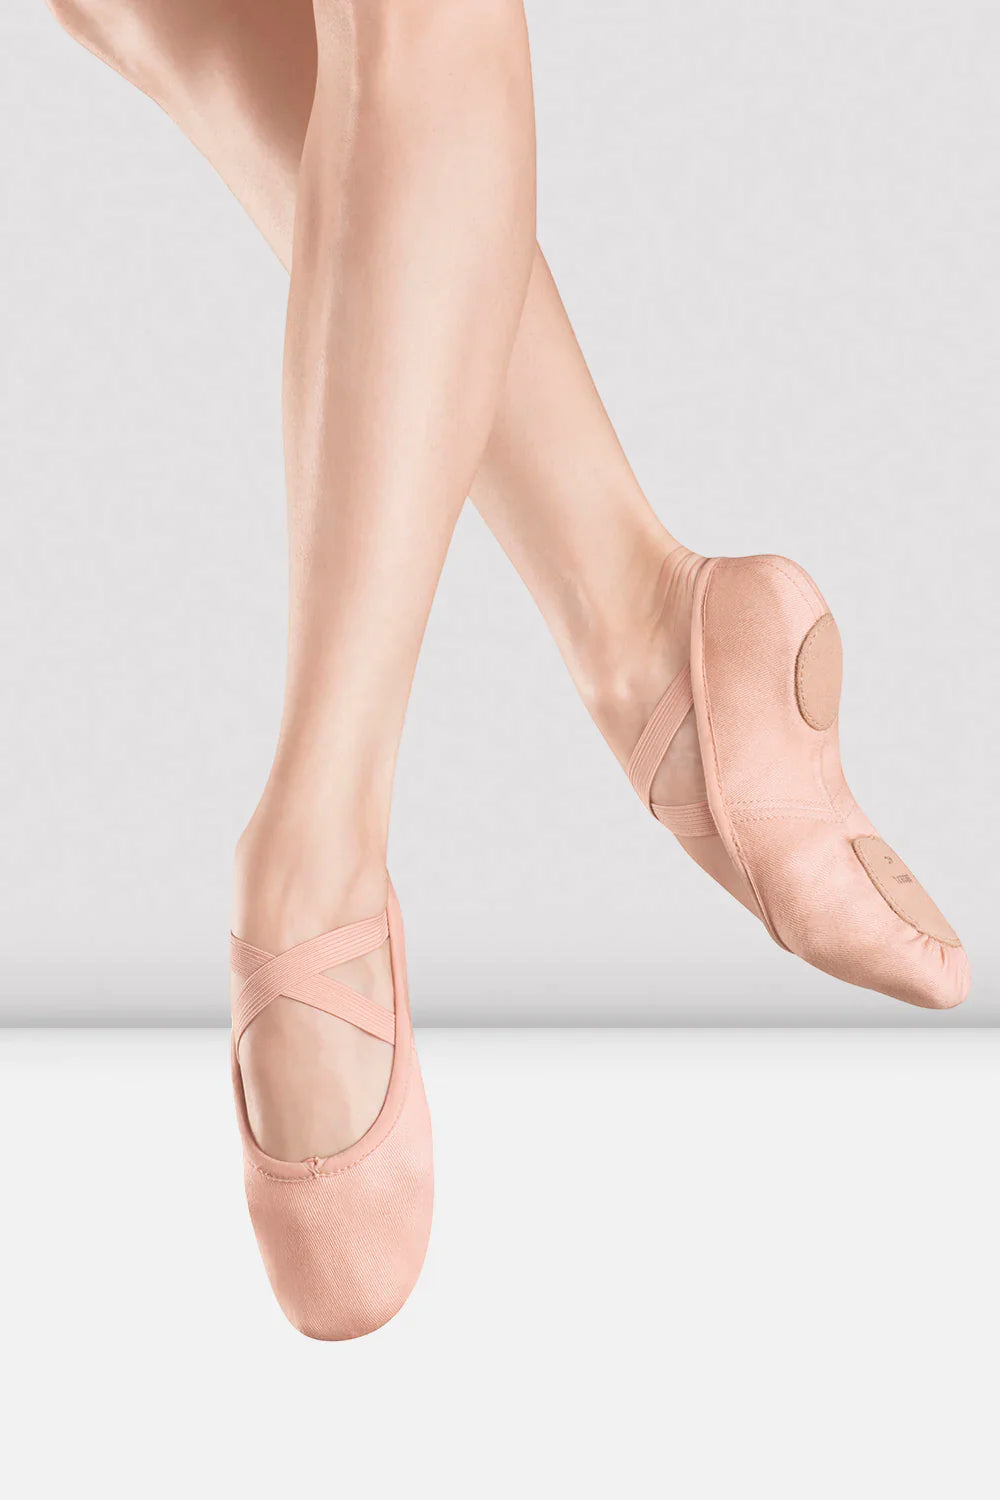 BLOCH Zenith Adults Stretch Canvas Split Sole Ballet Shoe